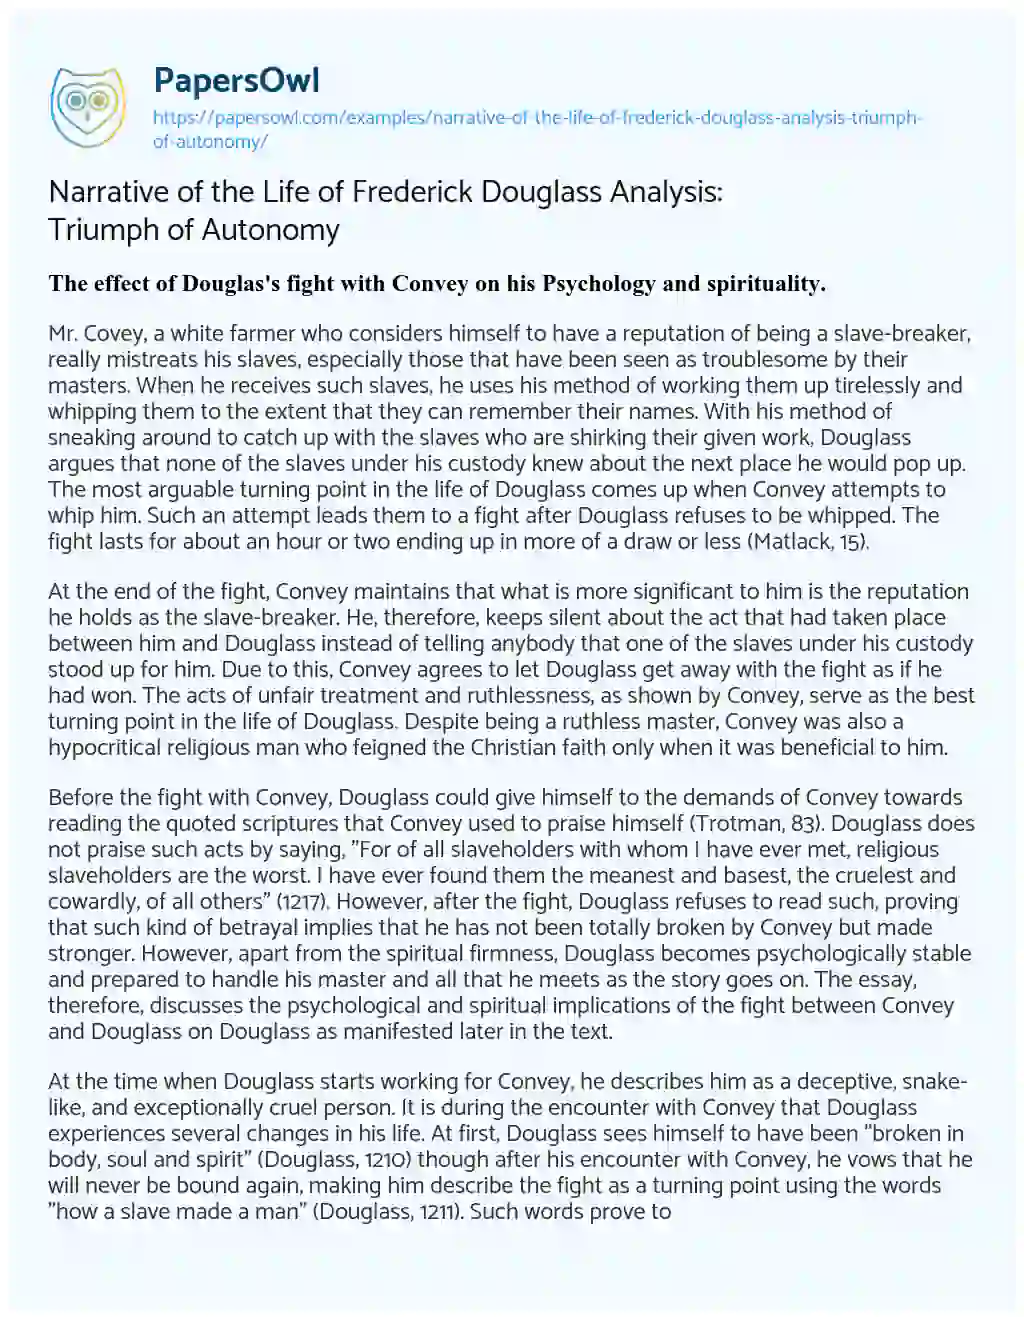 Essay on Narrative of the Life of Frederick Douglass Analysis: Triumph of Autonomy